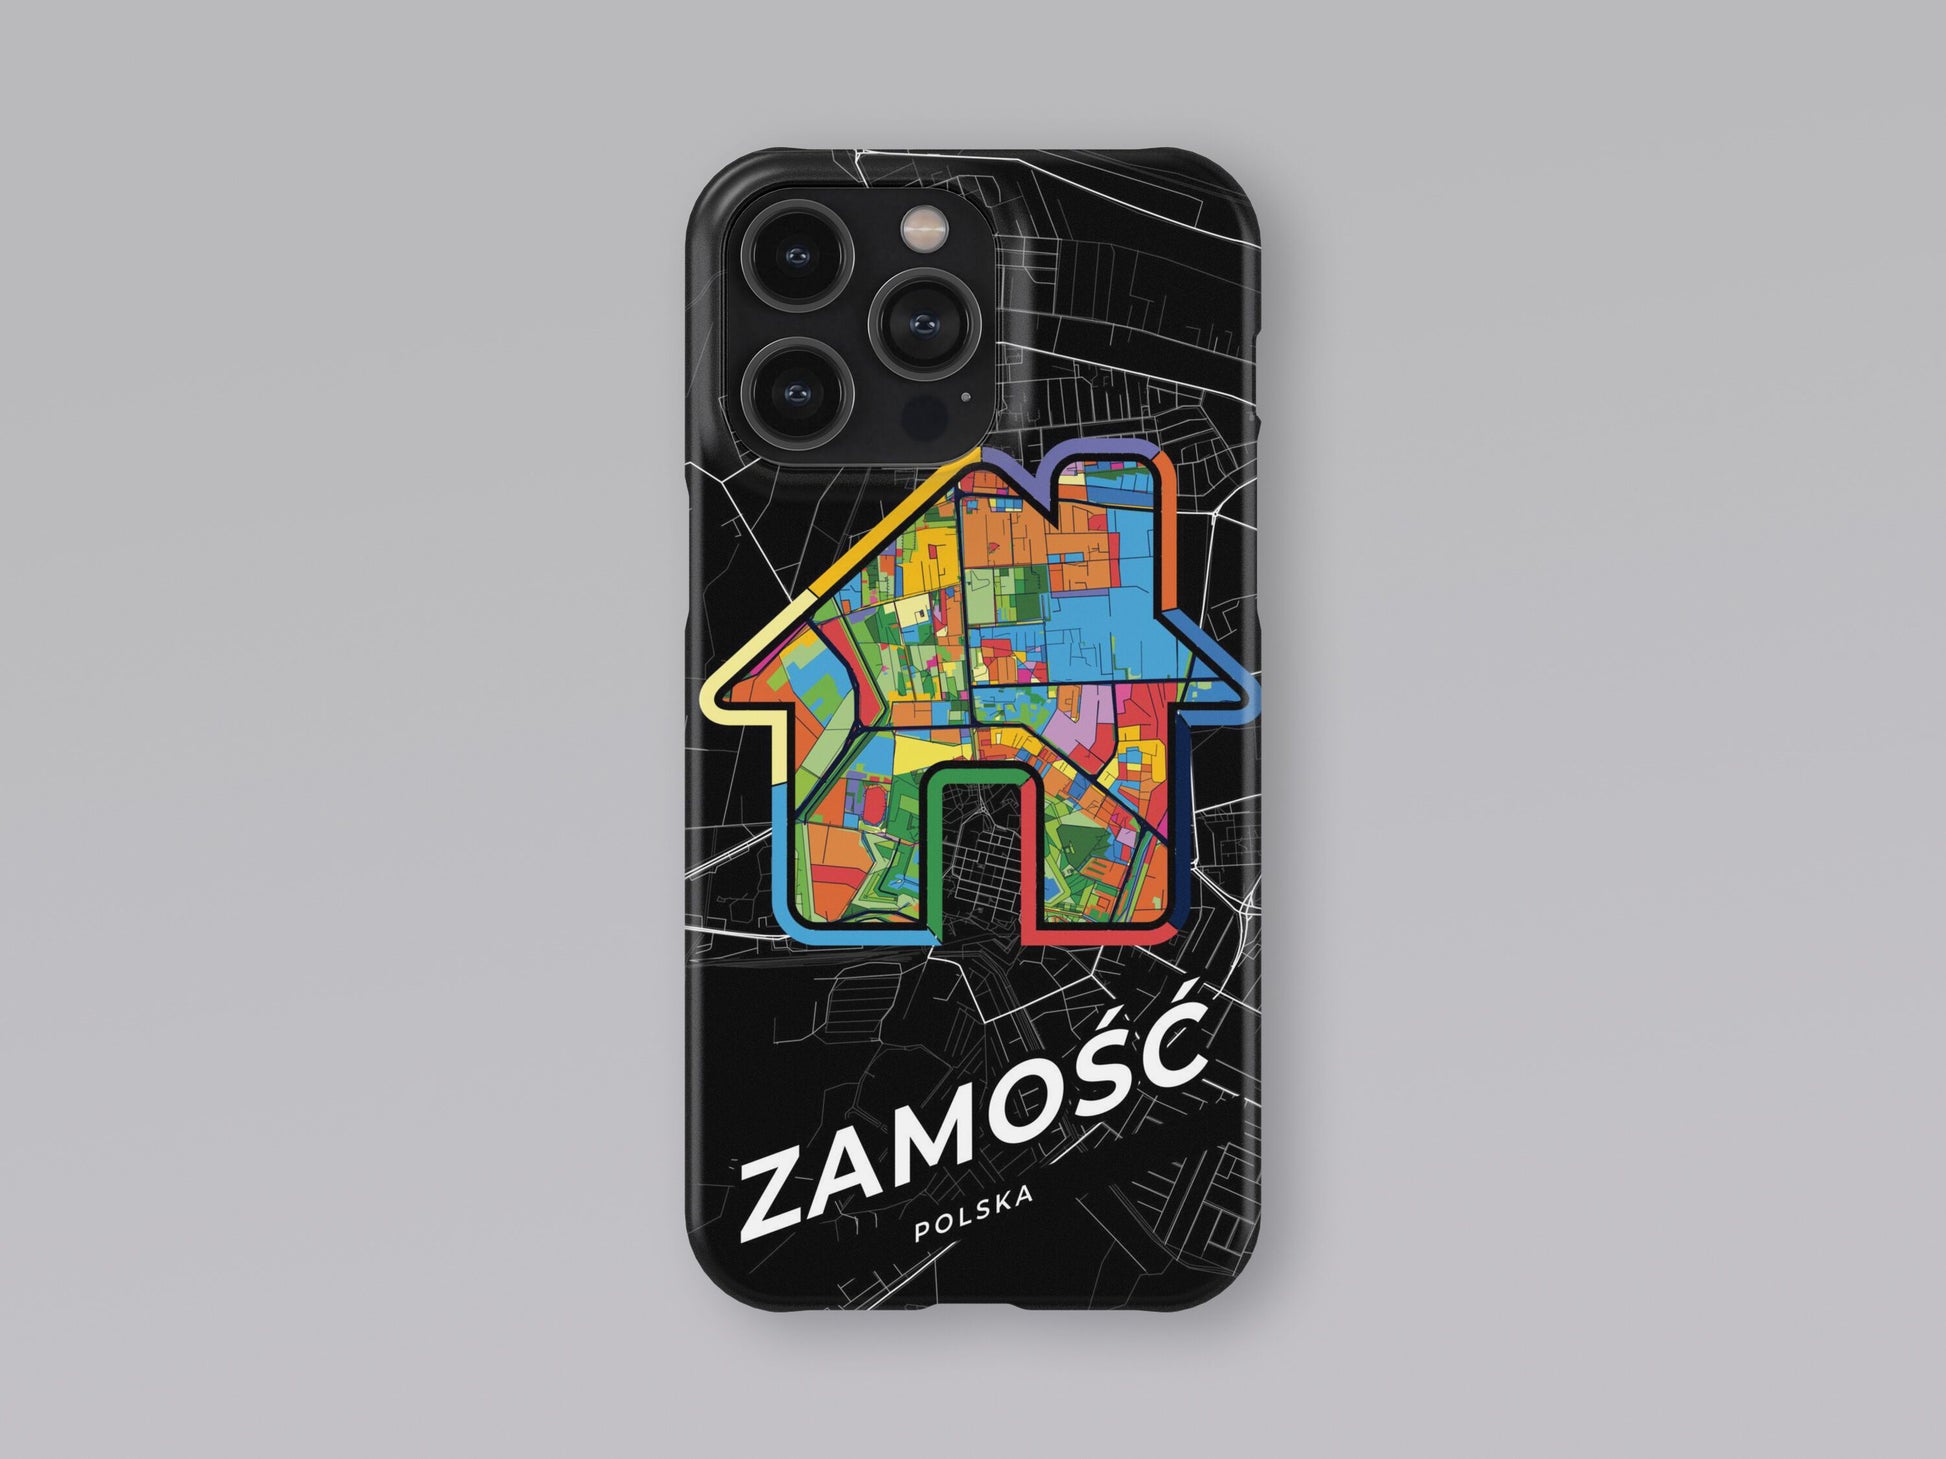 Zamość Poland slim phone case with colorful icon 3